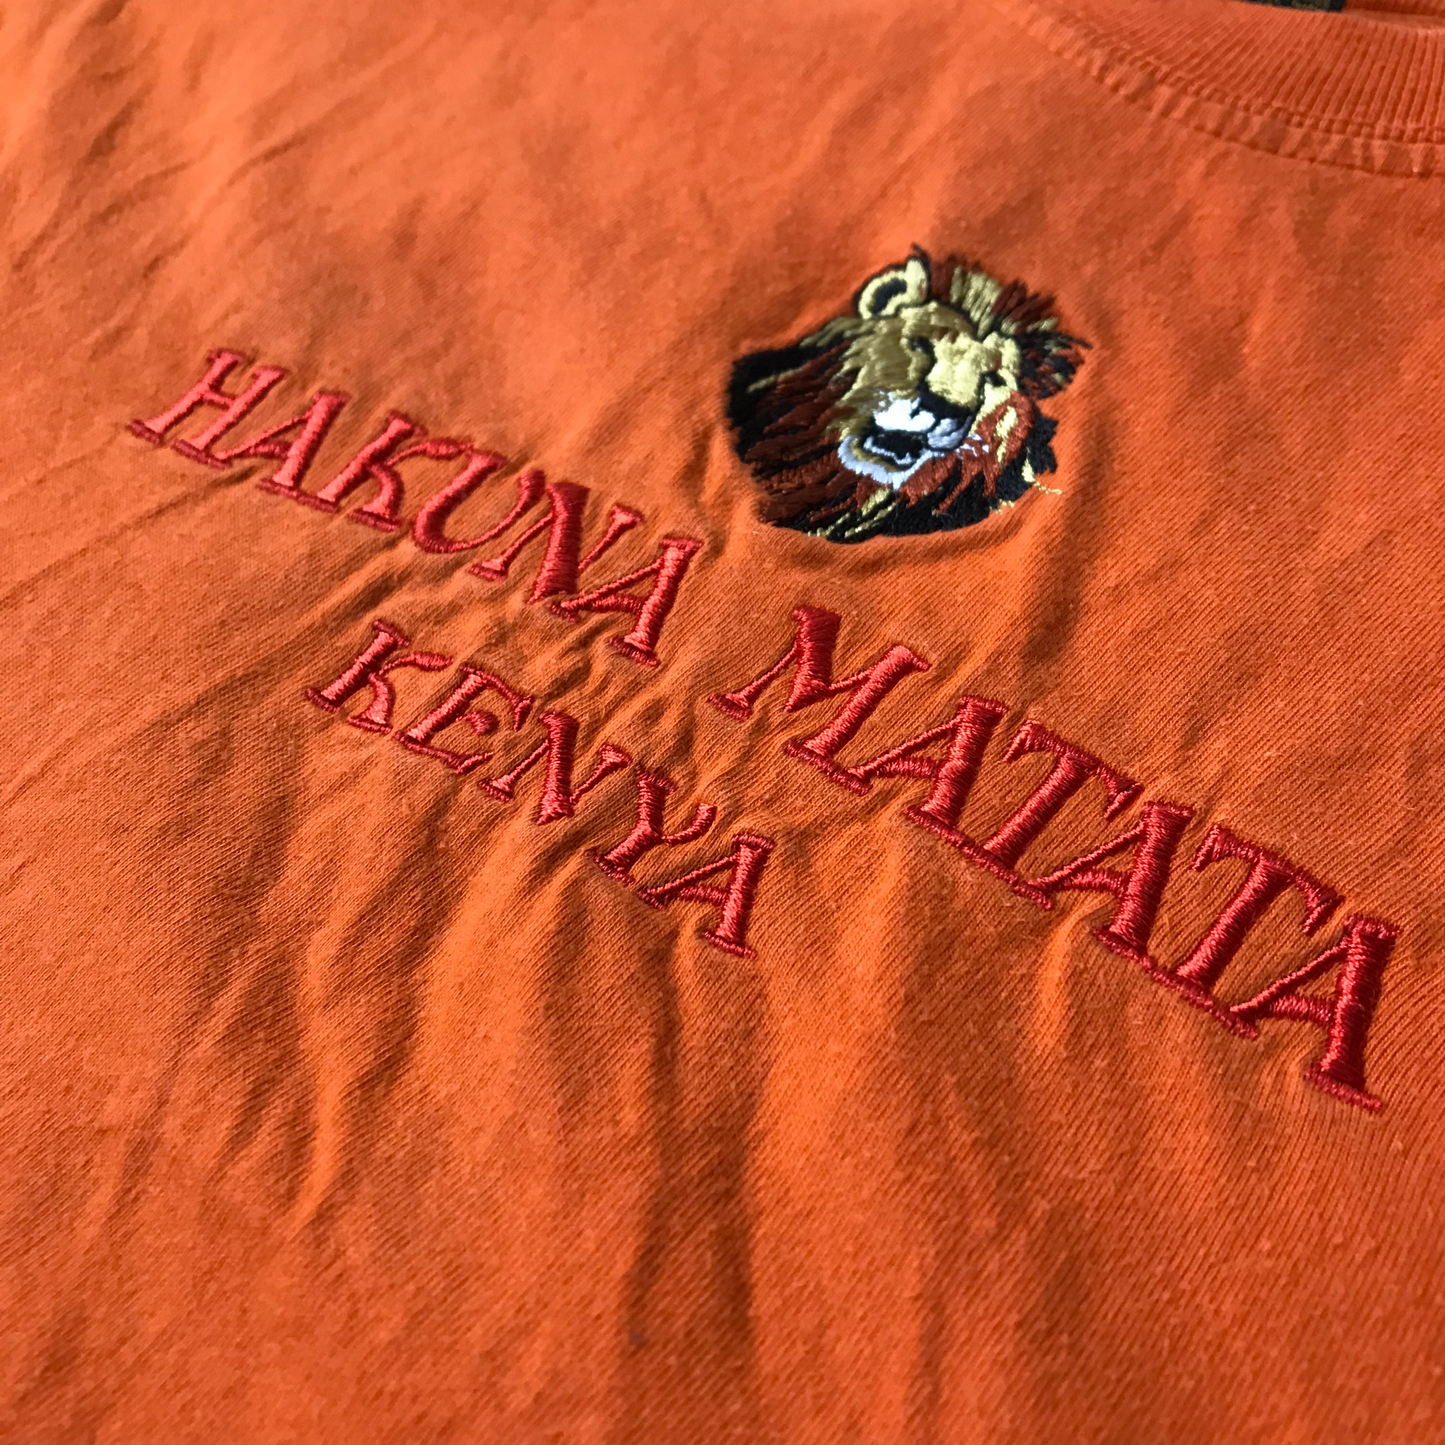 T-shirt - 'Hakuna Matata Kenya' - Age 10